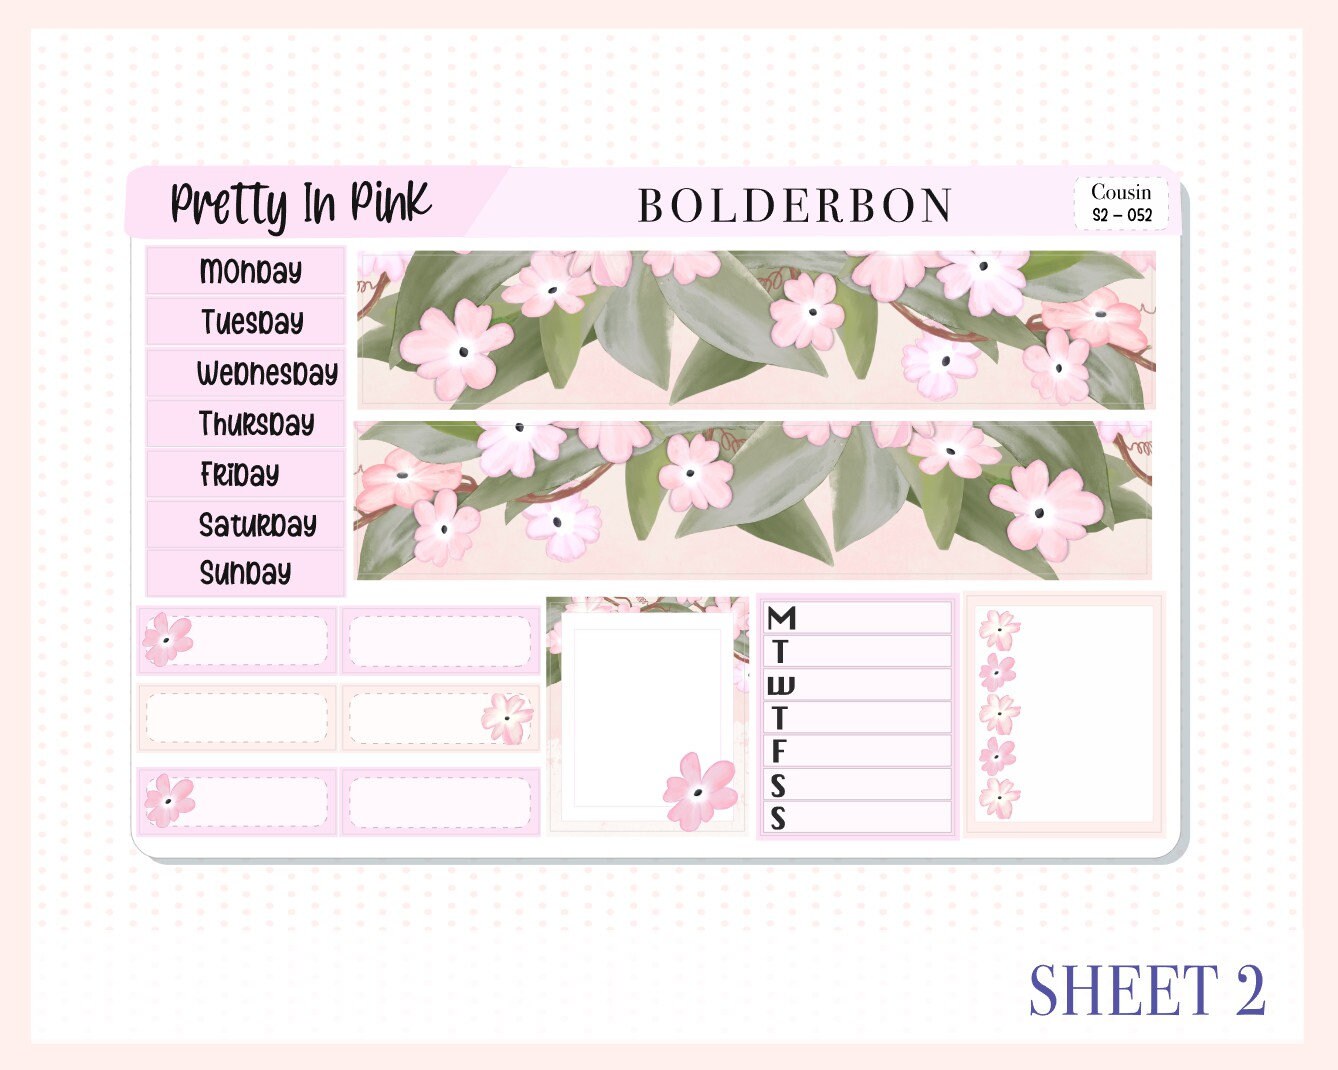 PRETTY IN PINK || Hobonichi Cousin Planner Sticker Kit